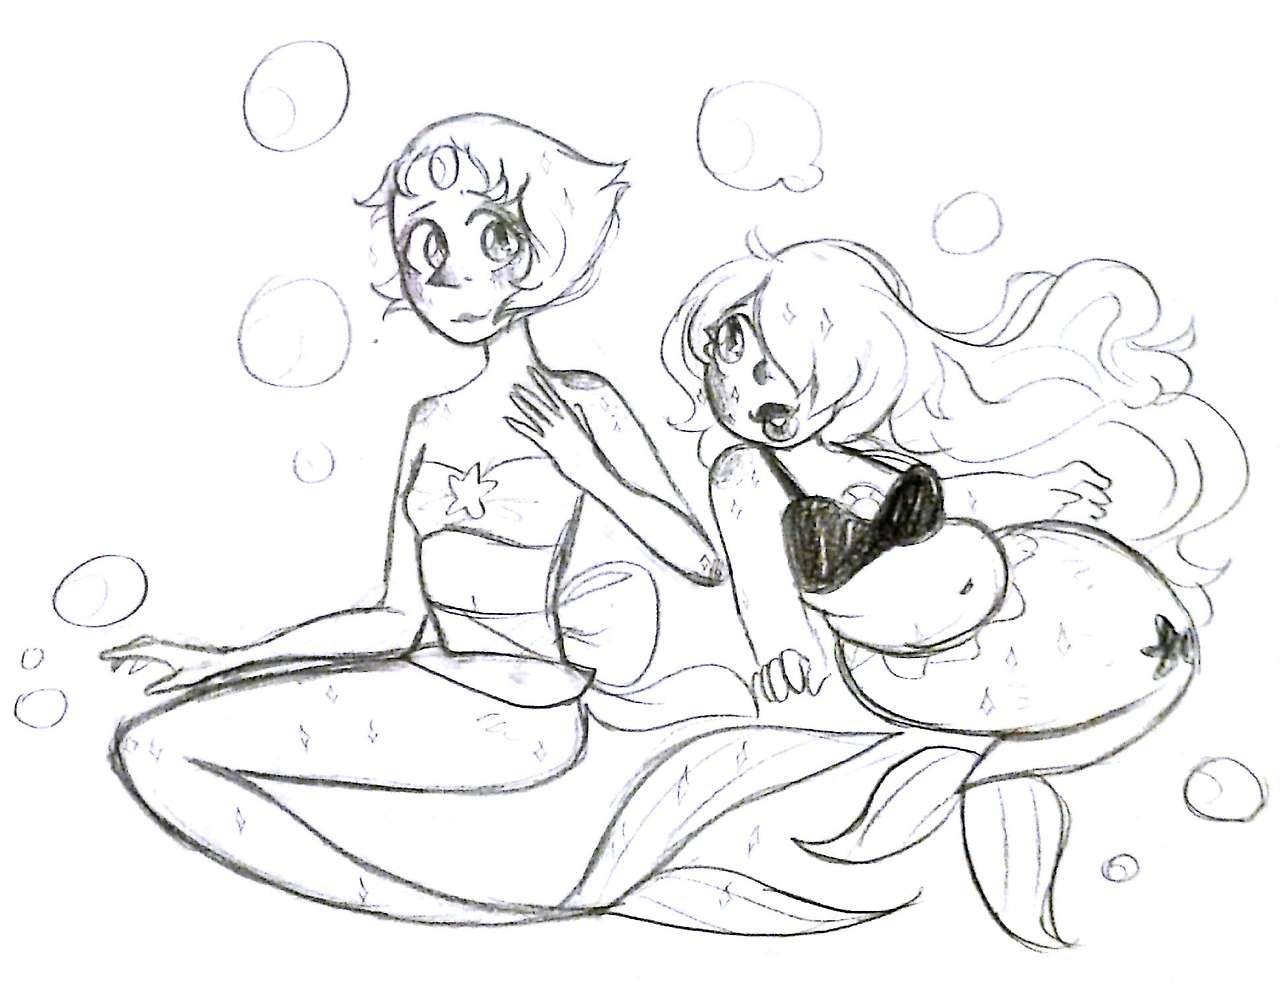 Felt like drawing them as mermaids before I go to sleep